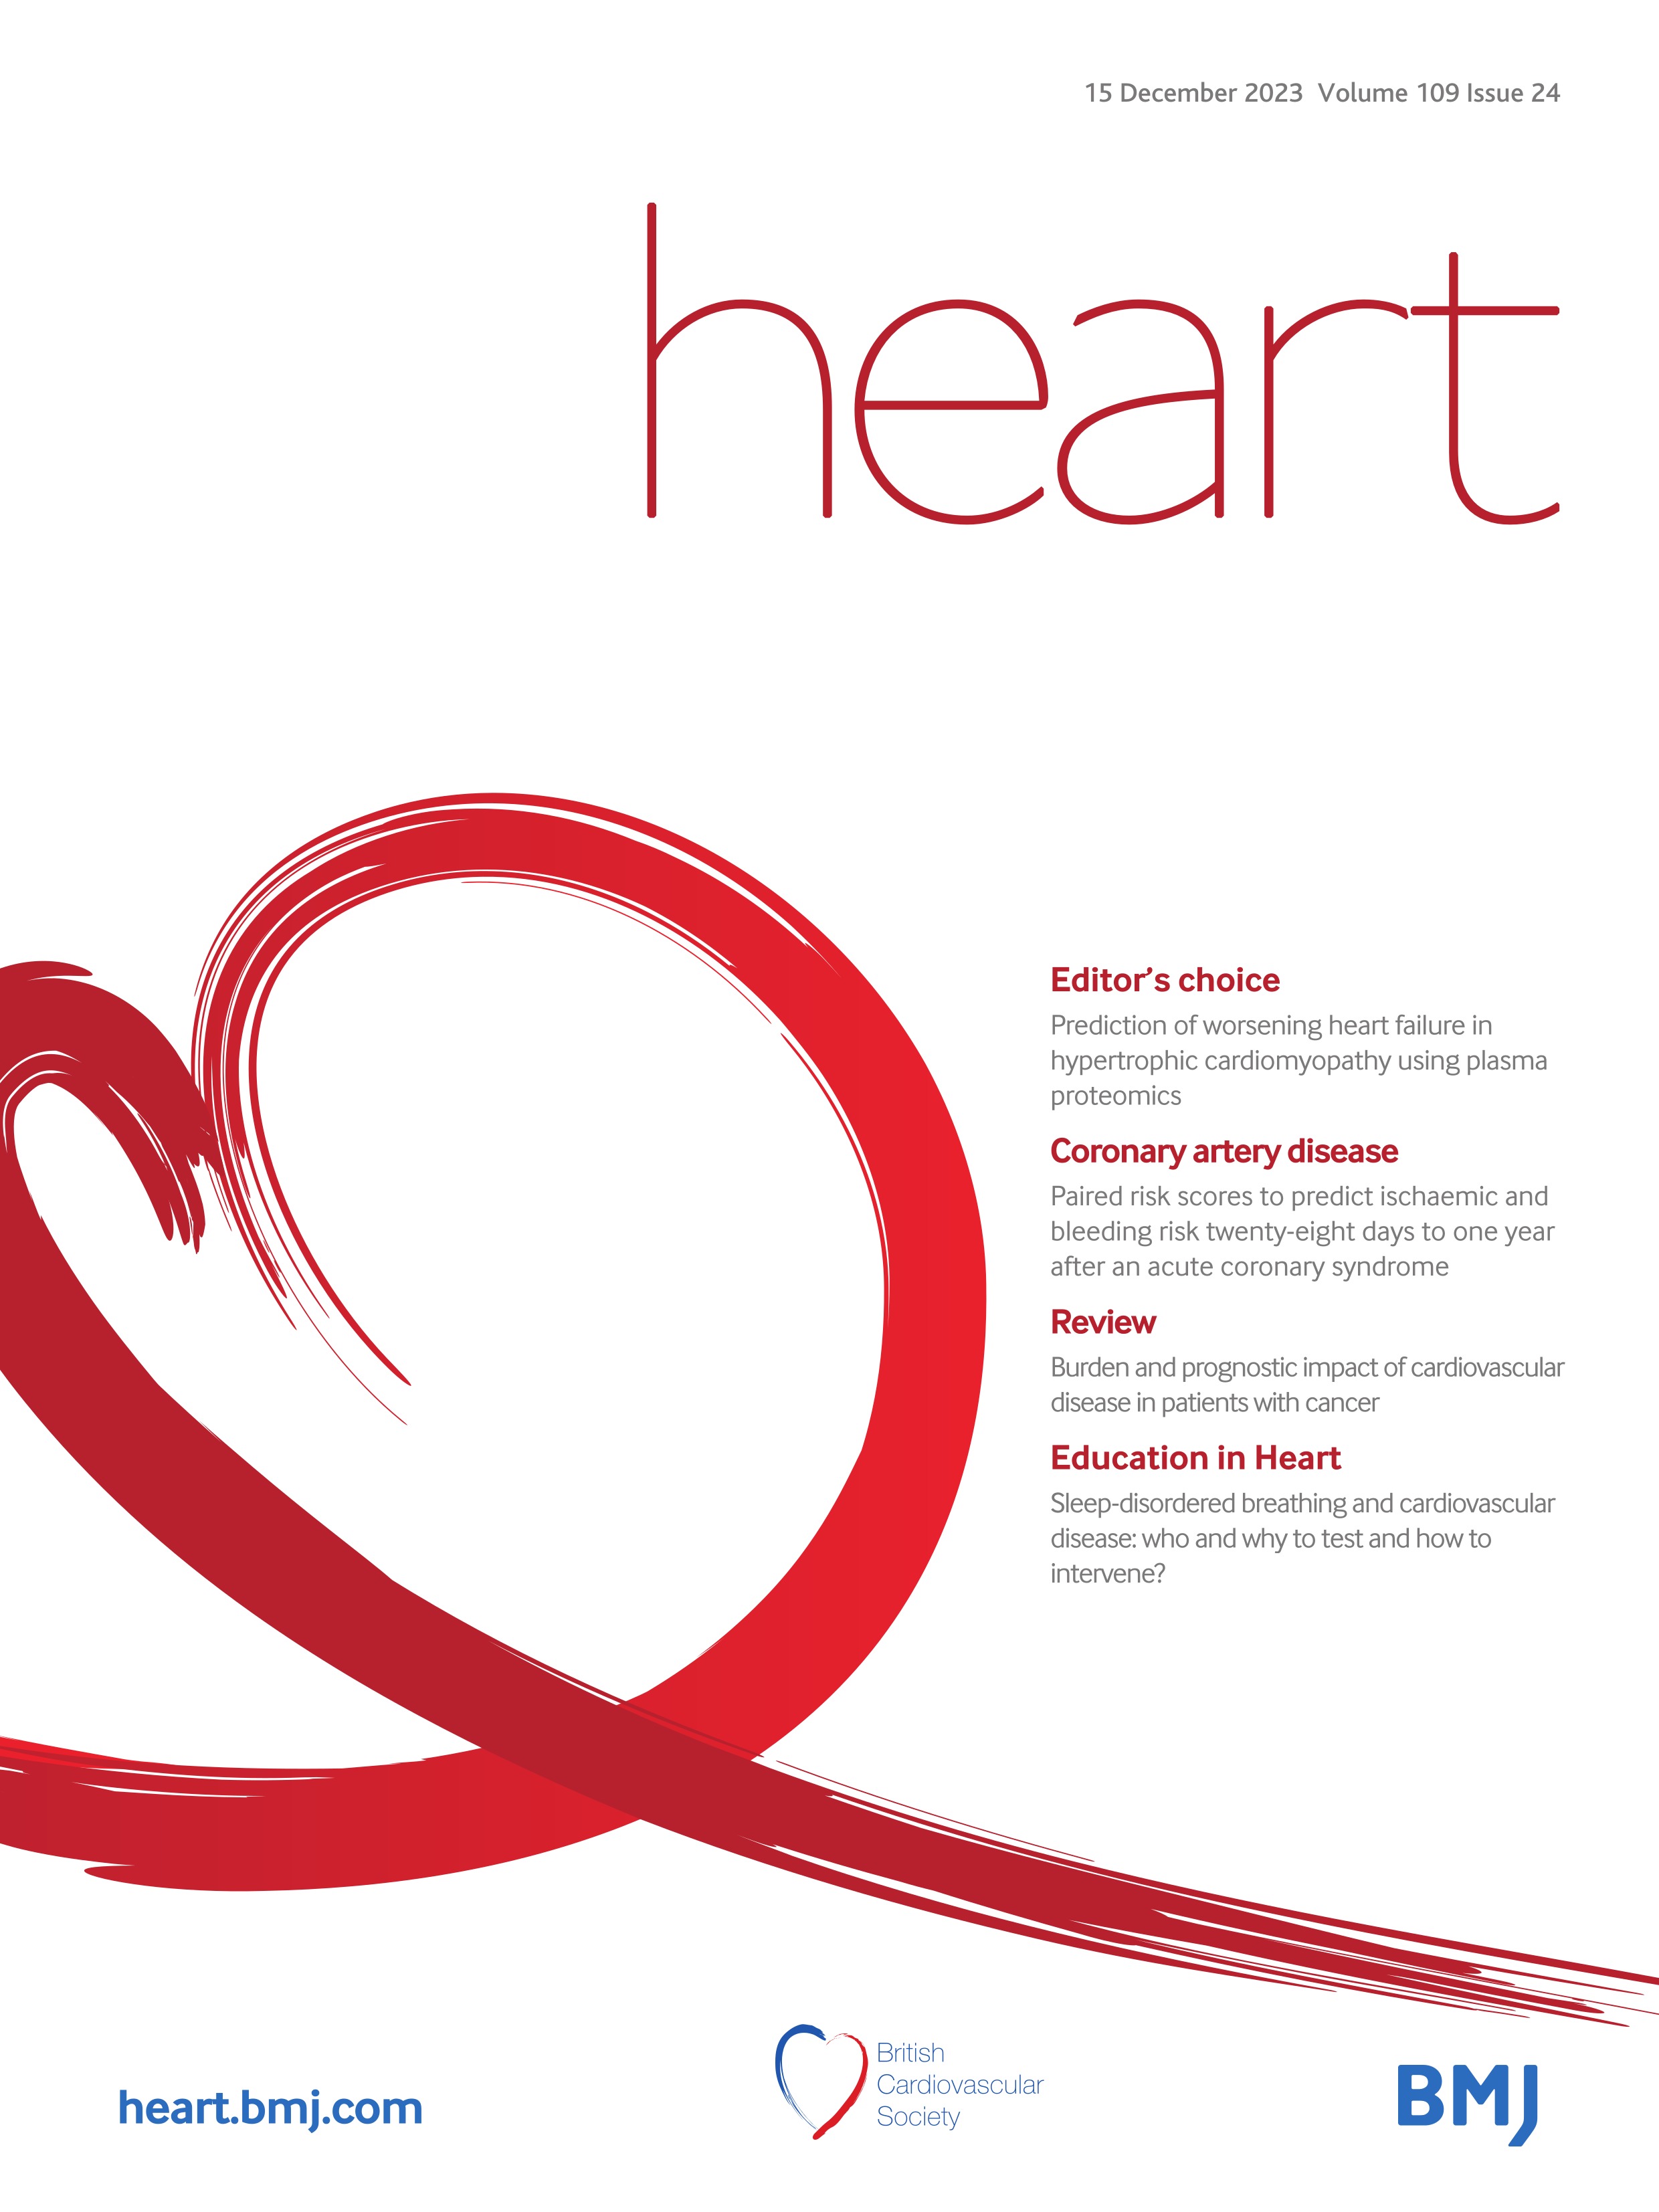 Prediction of worsening heart failure in hypertrophic cardiomyopathy using plasma proteomics